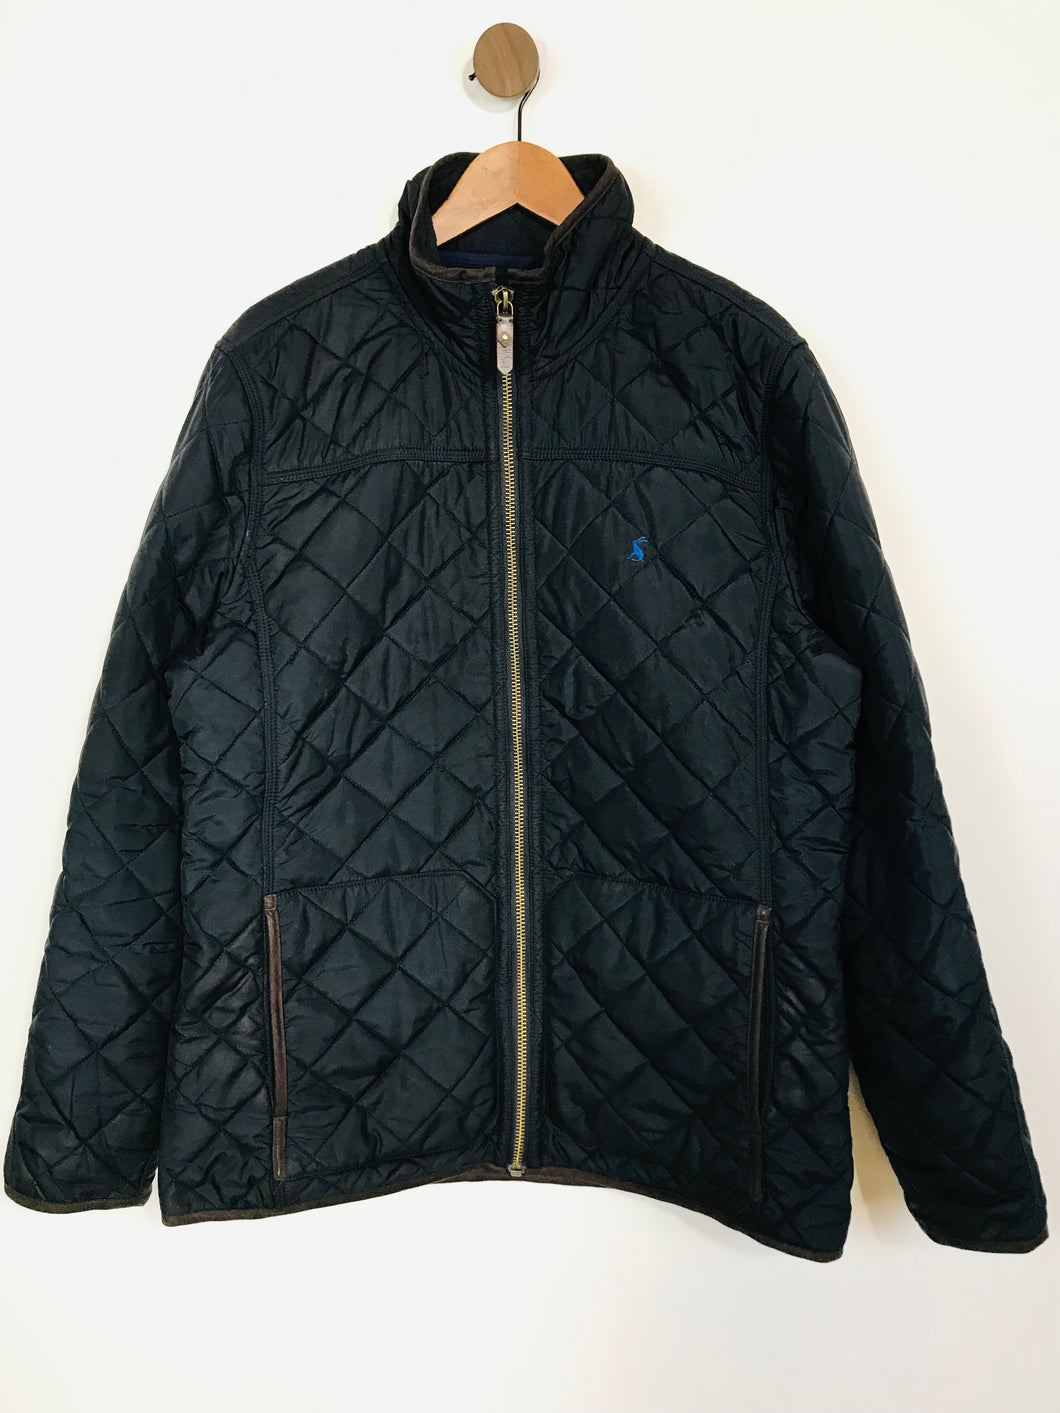 Joules Men's Fleece Lined Quilted Jacket | L | Black